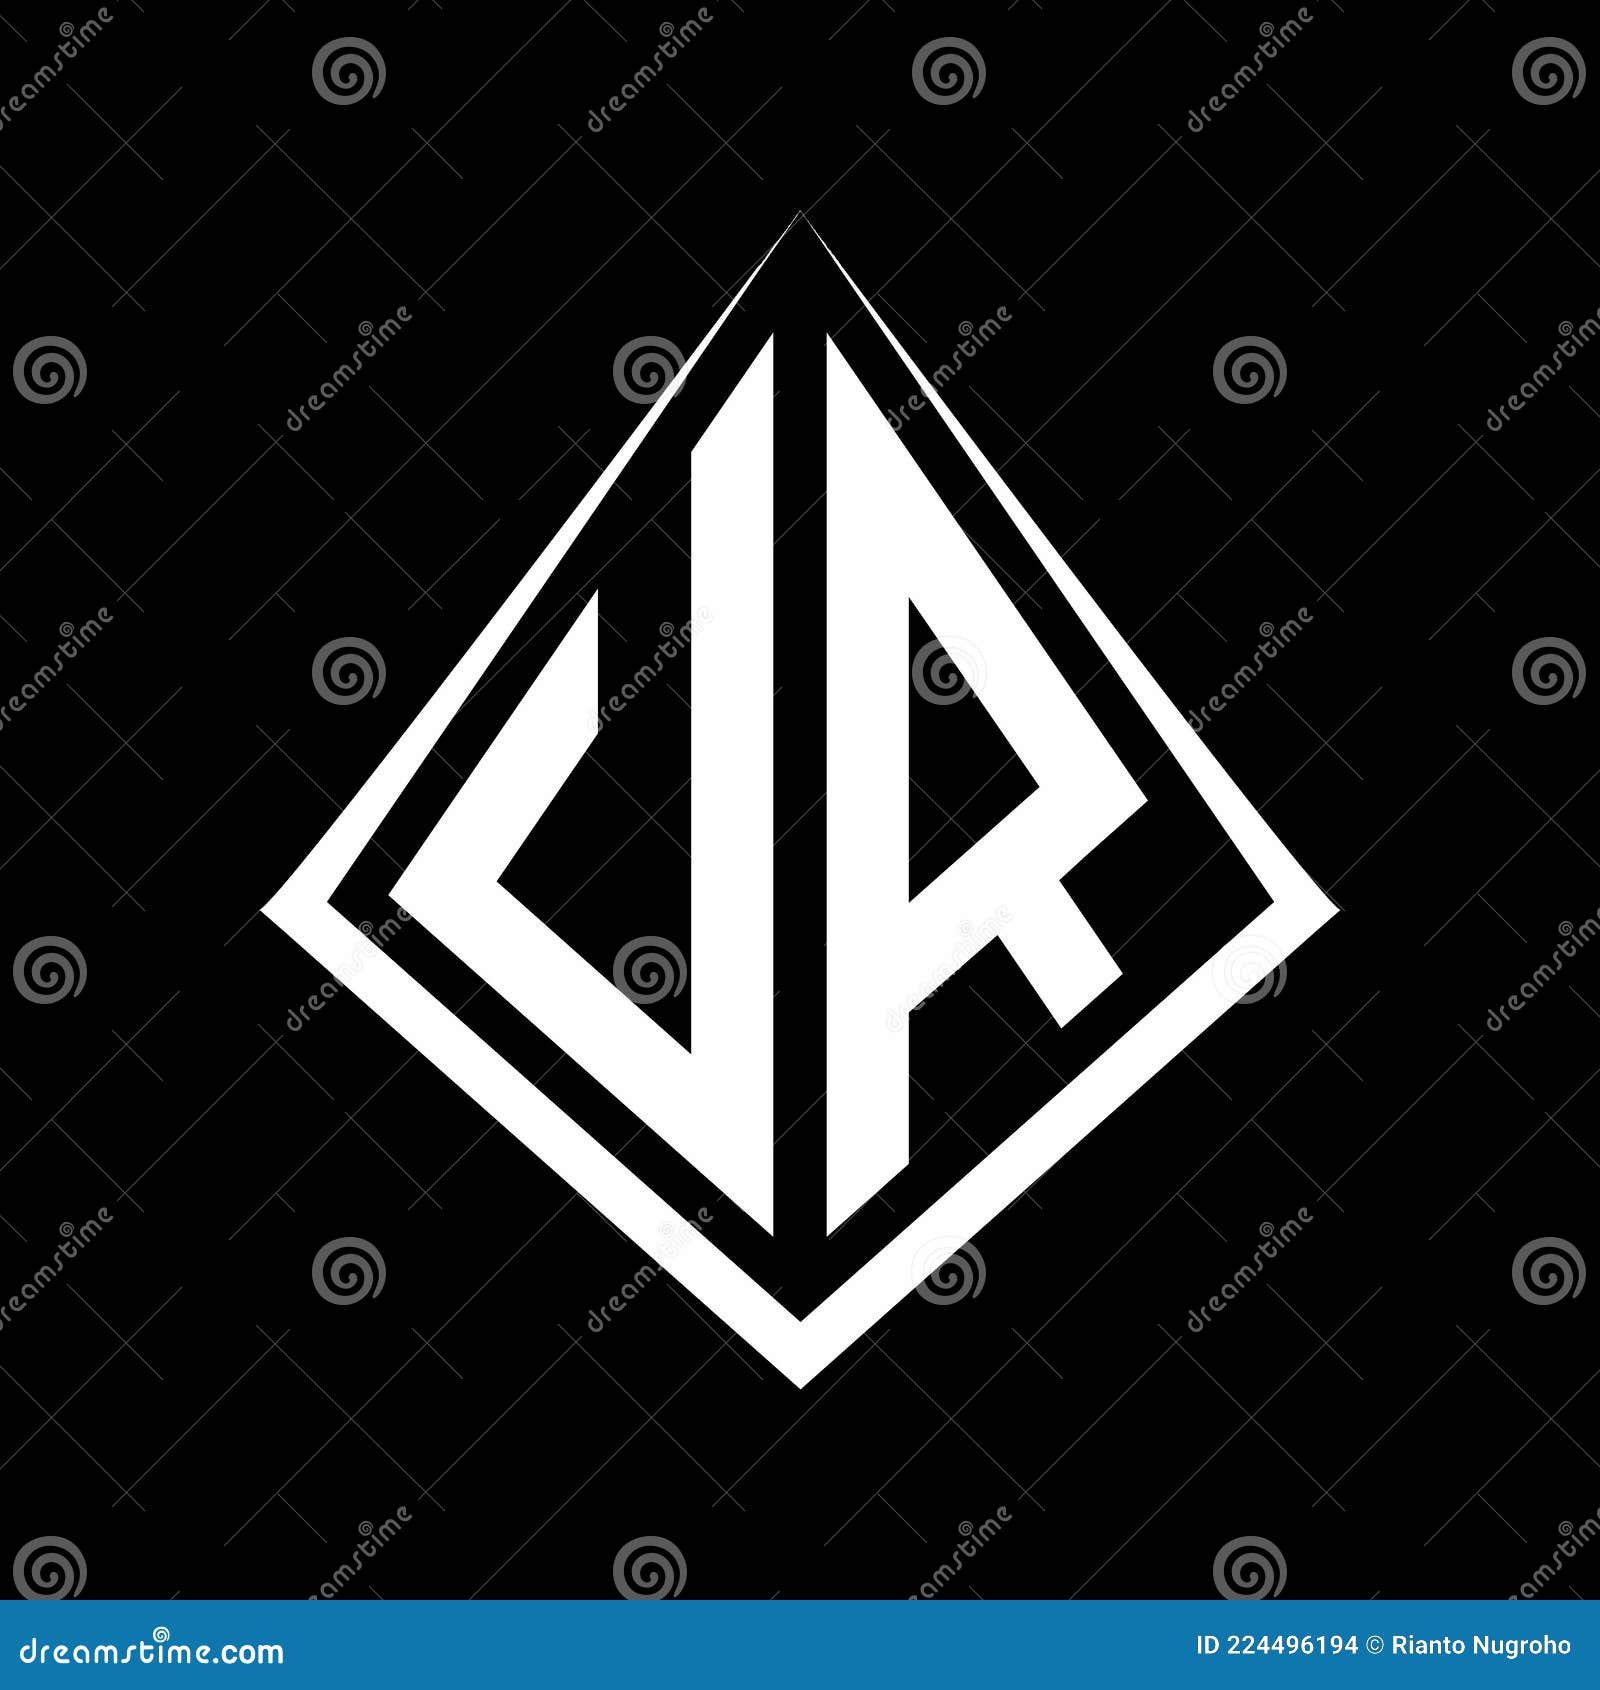 ur logo letters monogram with prisma   template